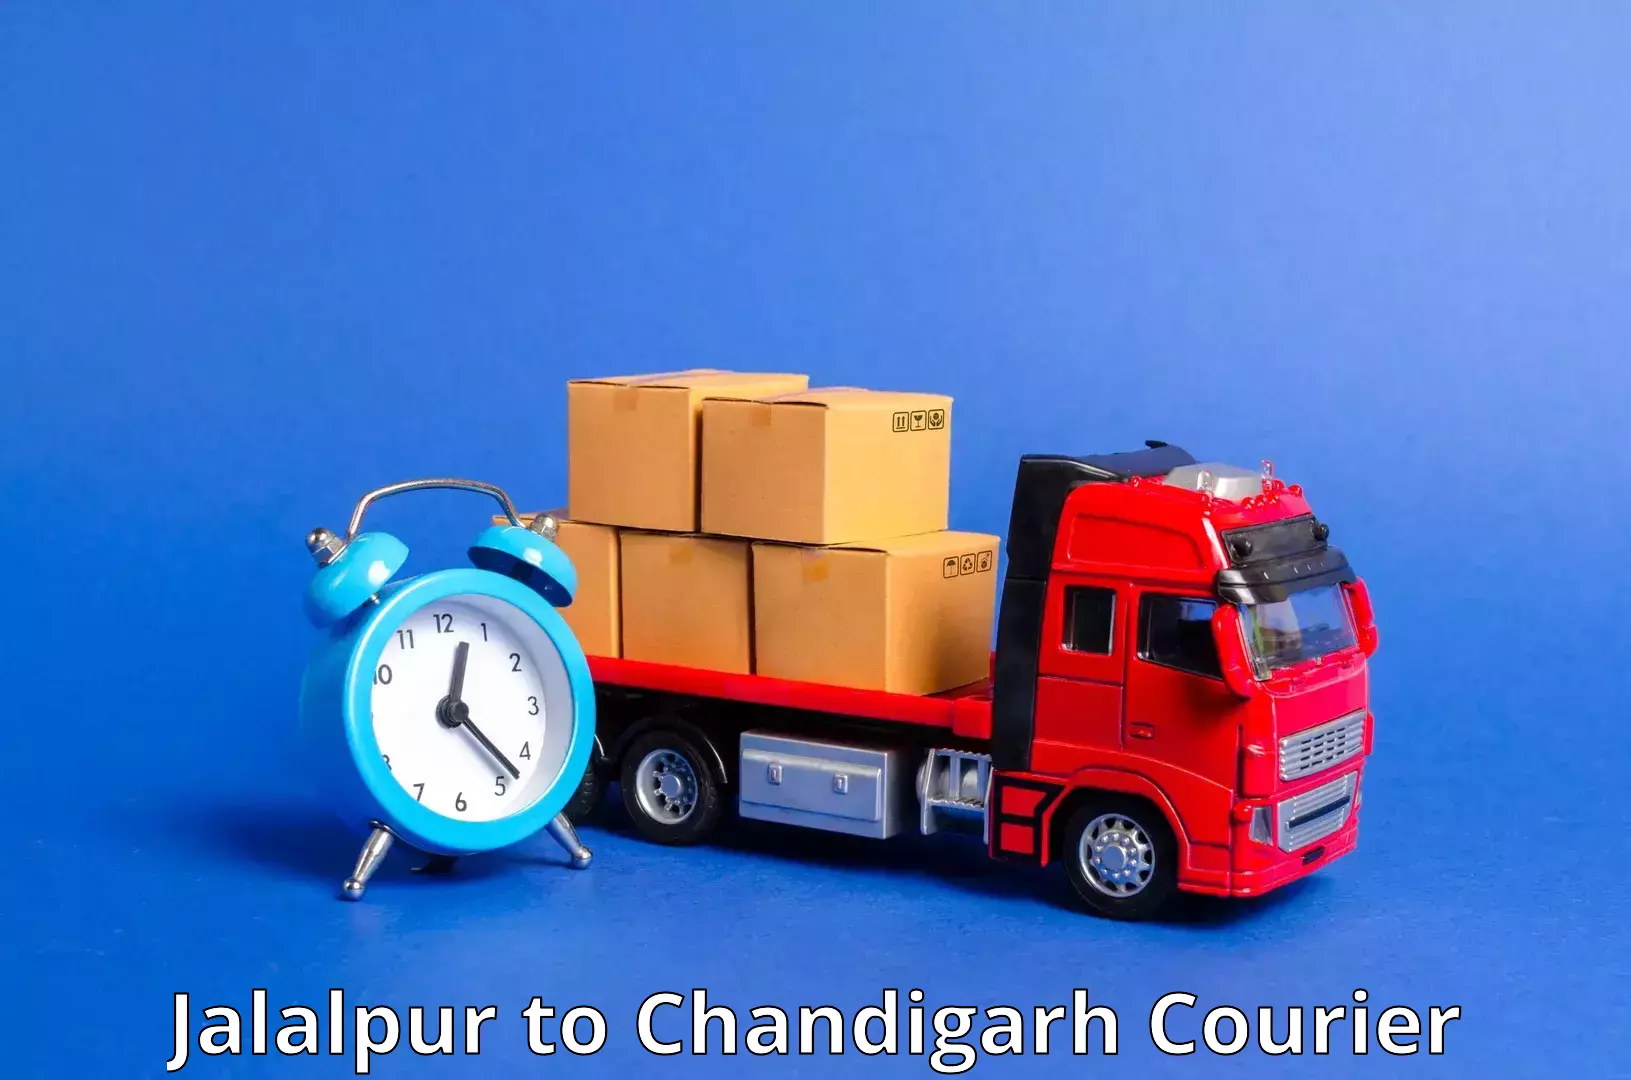 Courier service innovation Jalalpur to Chandigarh